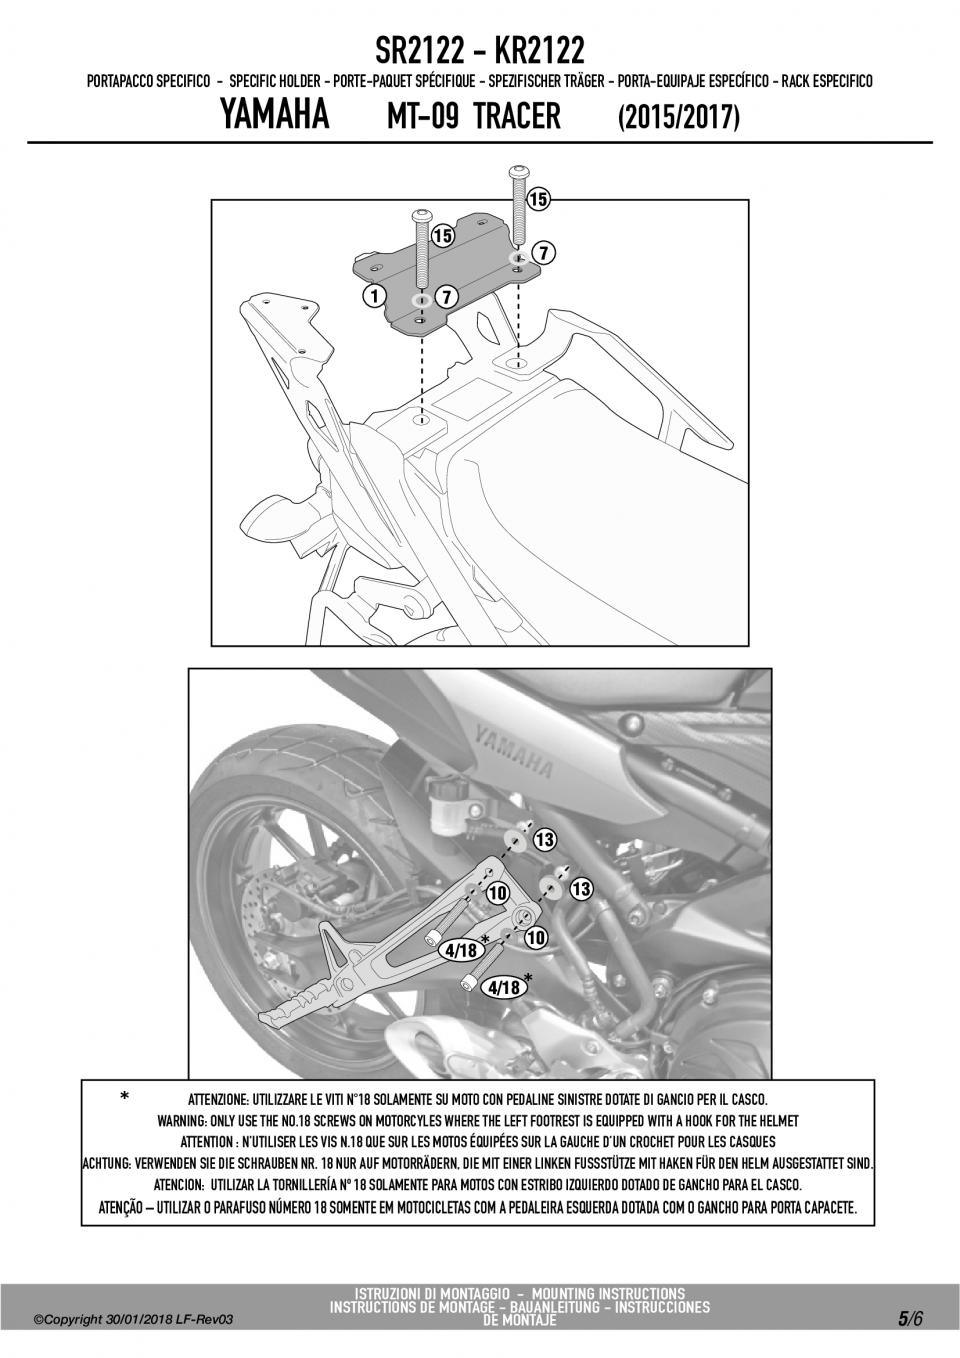 Support top case GIVI MONOKEY MONOLOCK pour moto Yamaha 900 Mt-09 Tracer SR2122